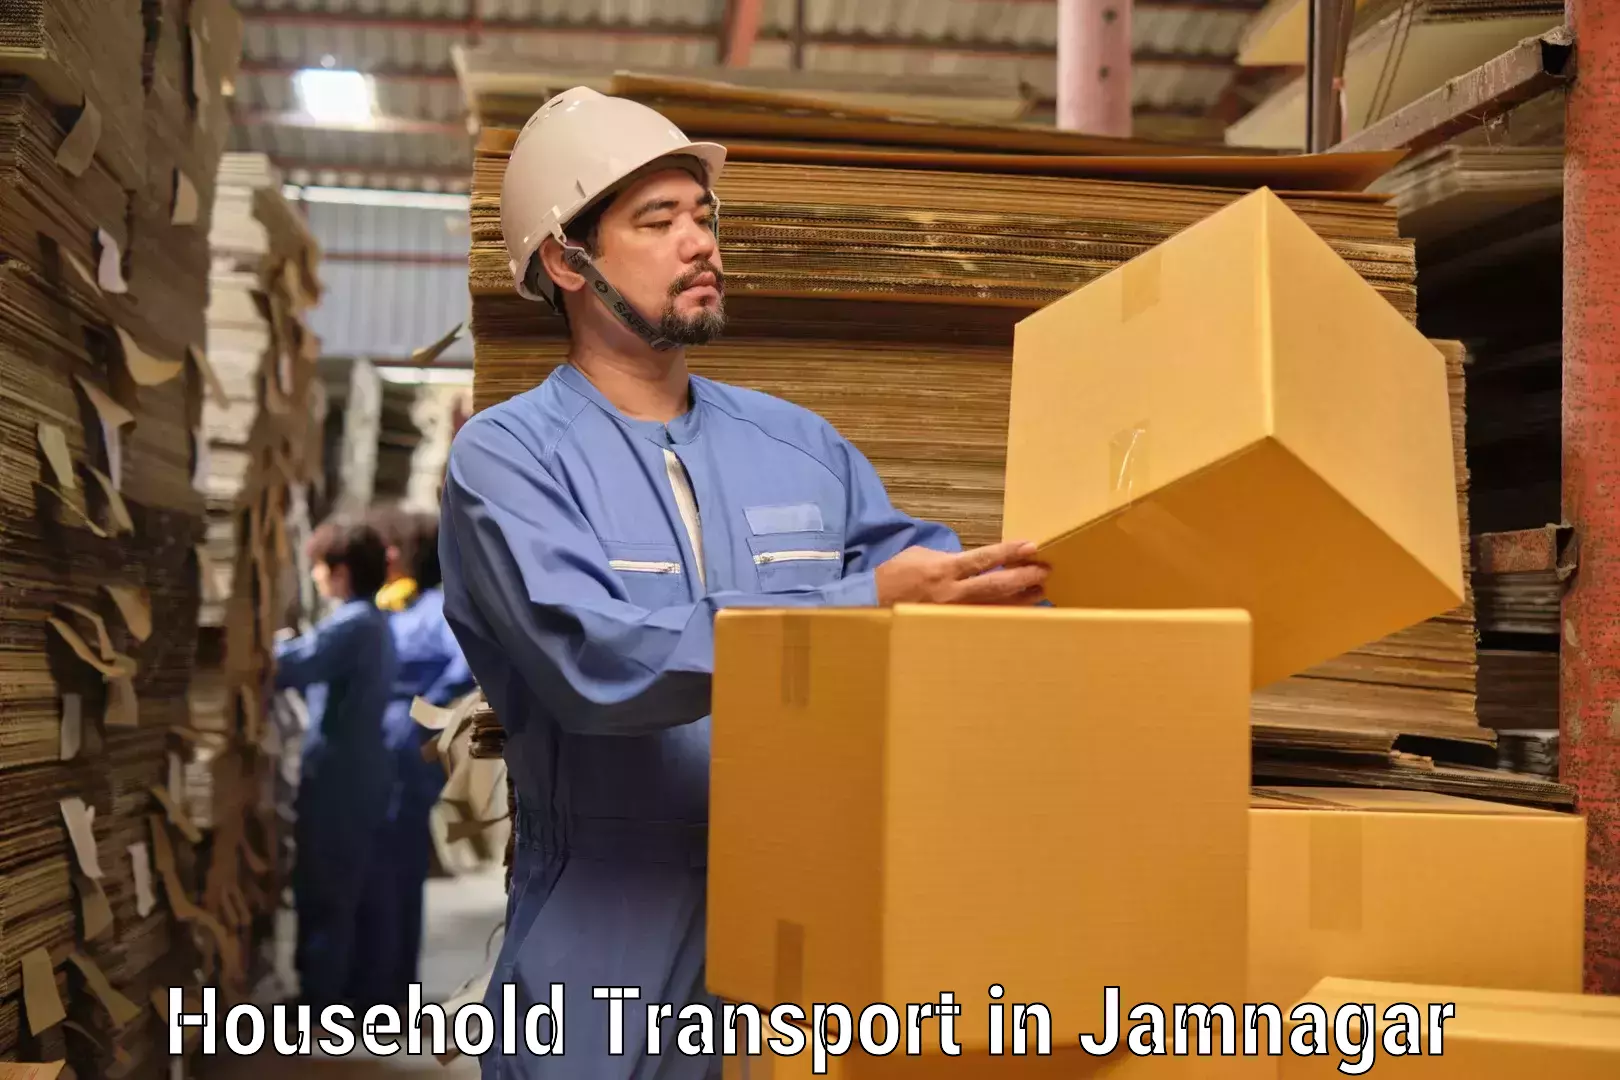 Household goods transport in Jamnagar